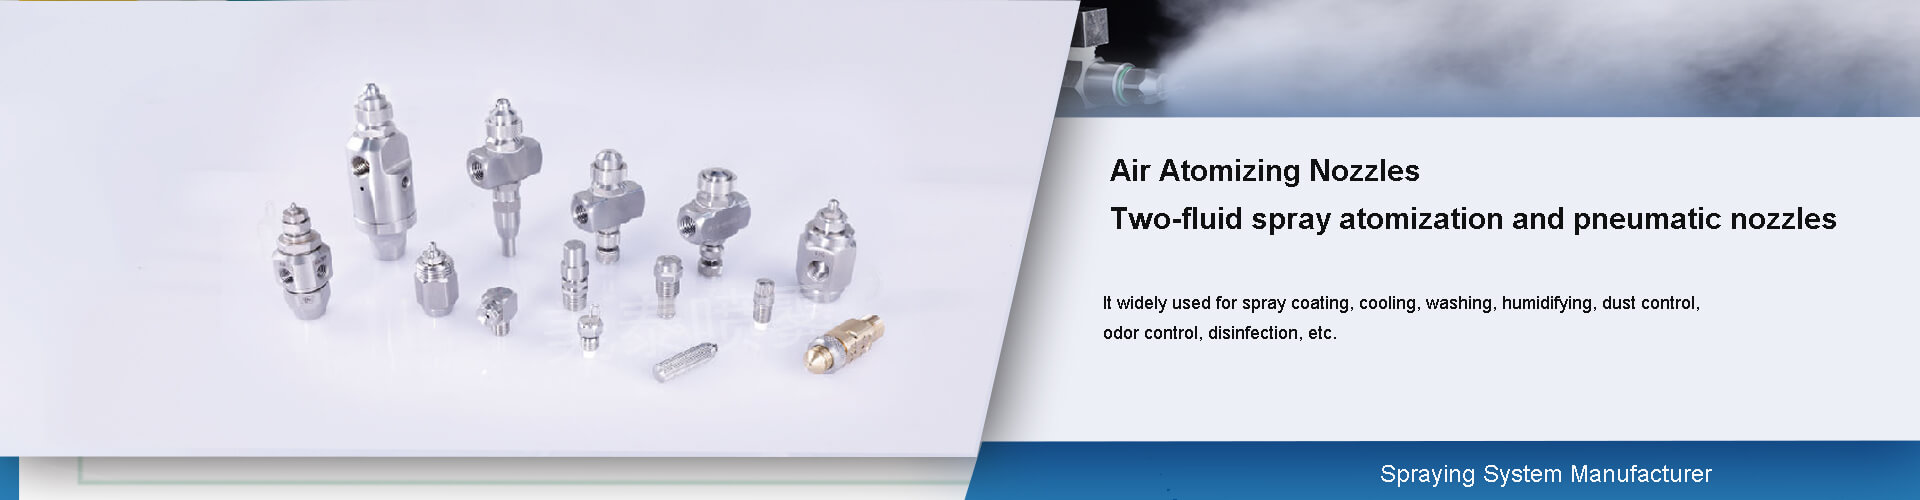 air atomizing nozzles